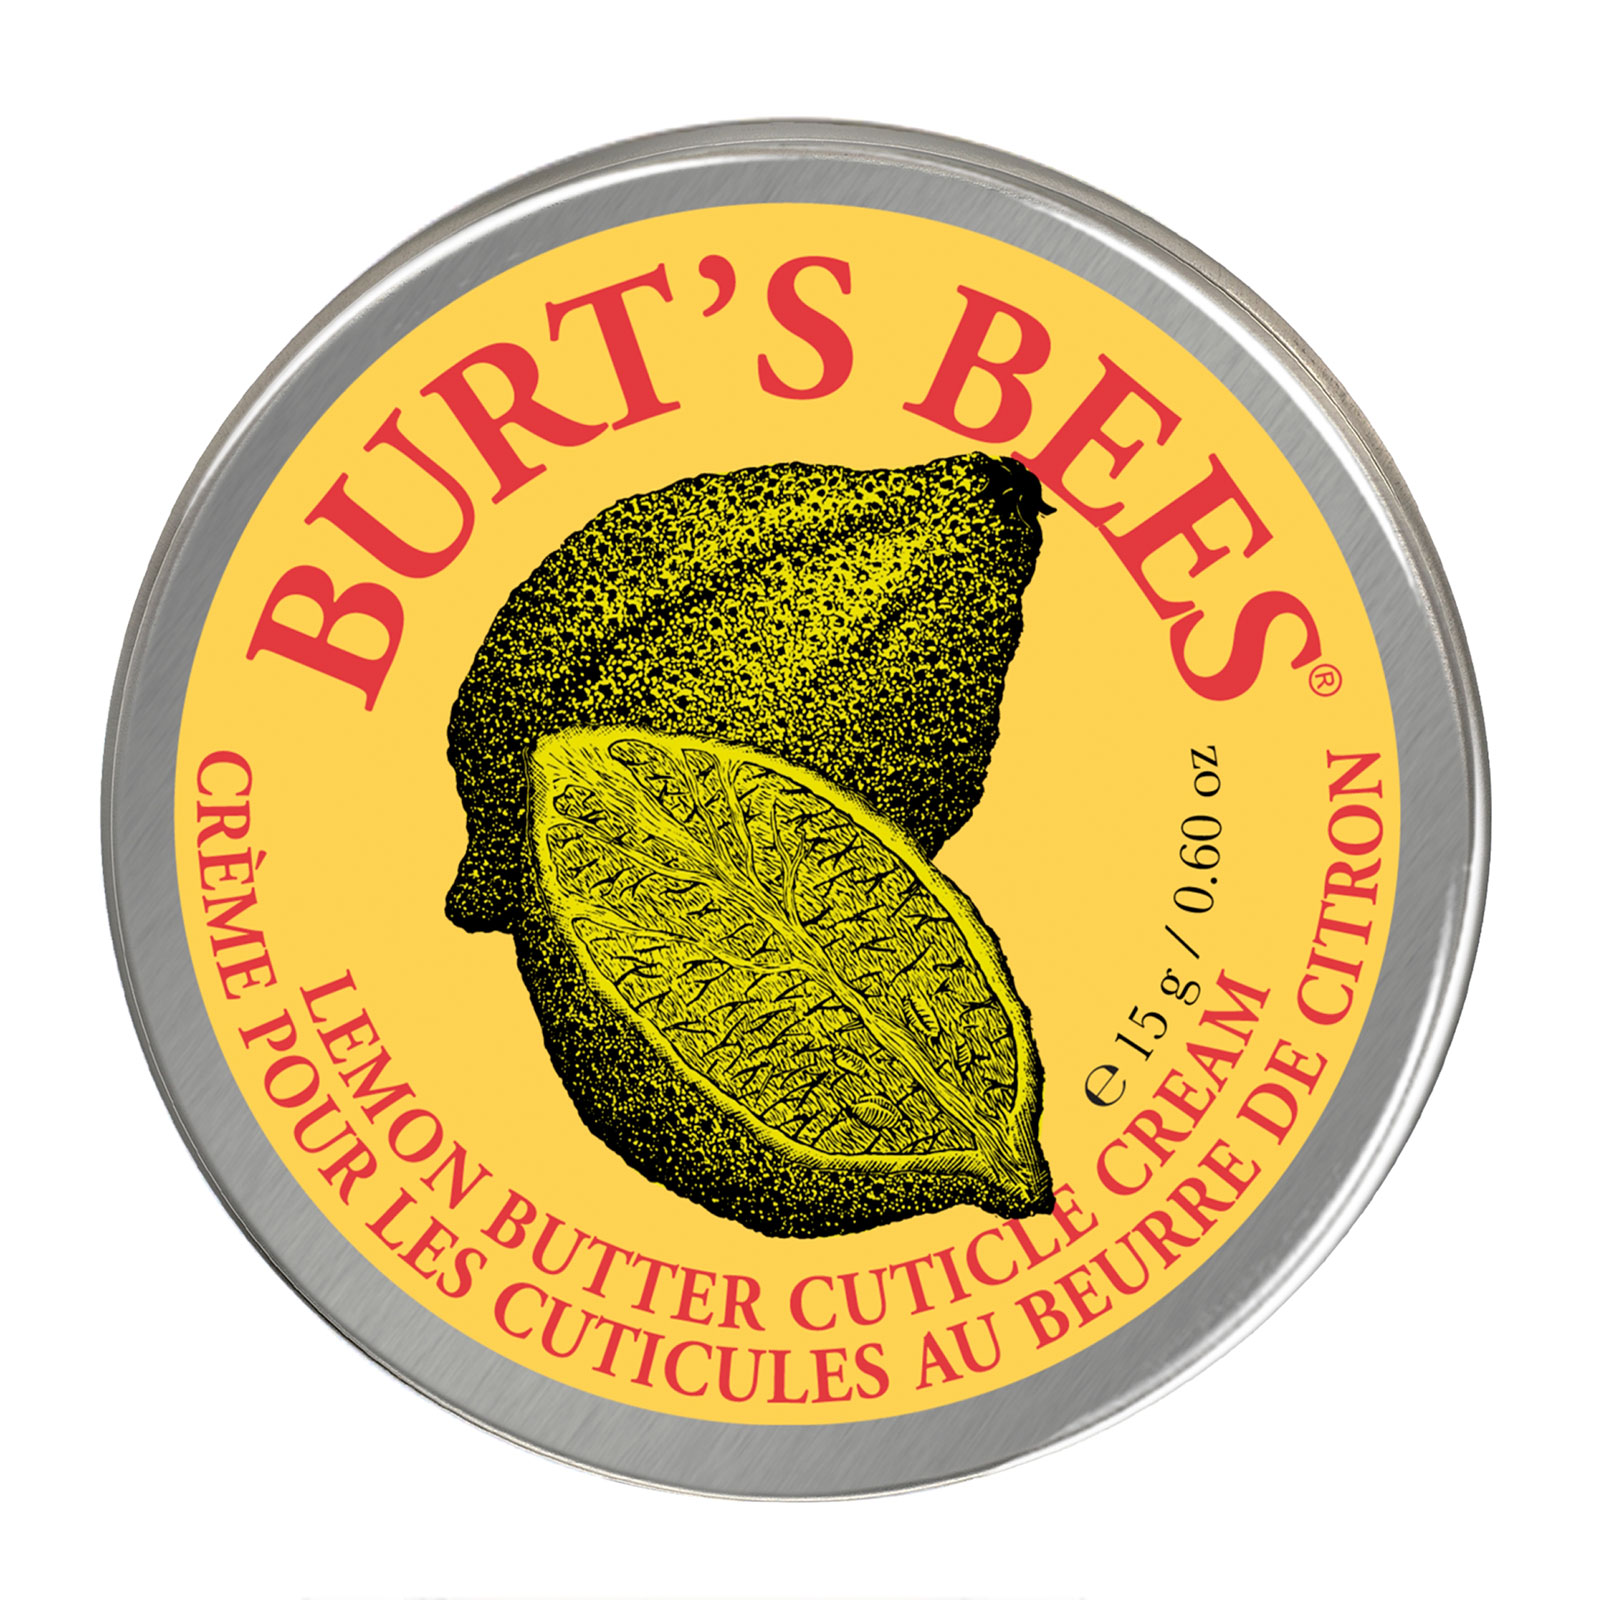 Burt's Bees Lemon Butter Cuticle Creme 15G